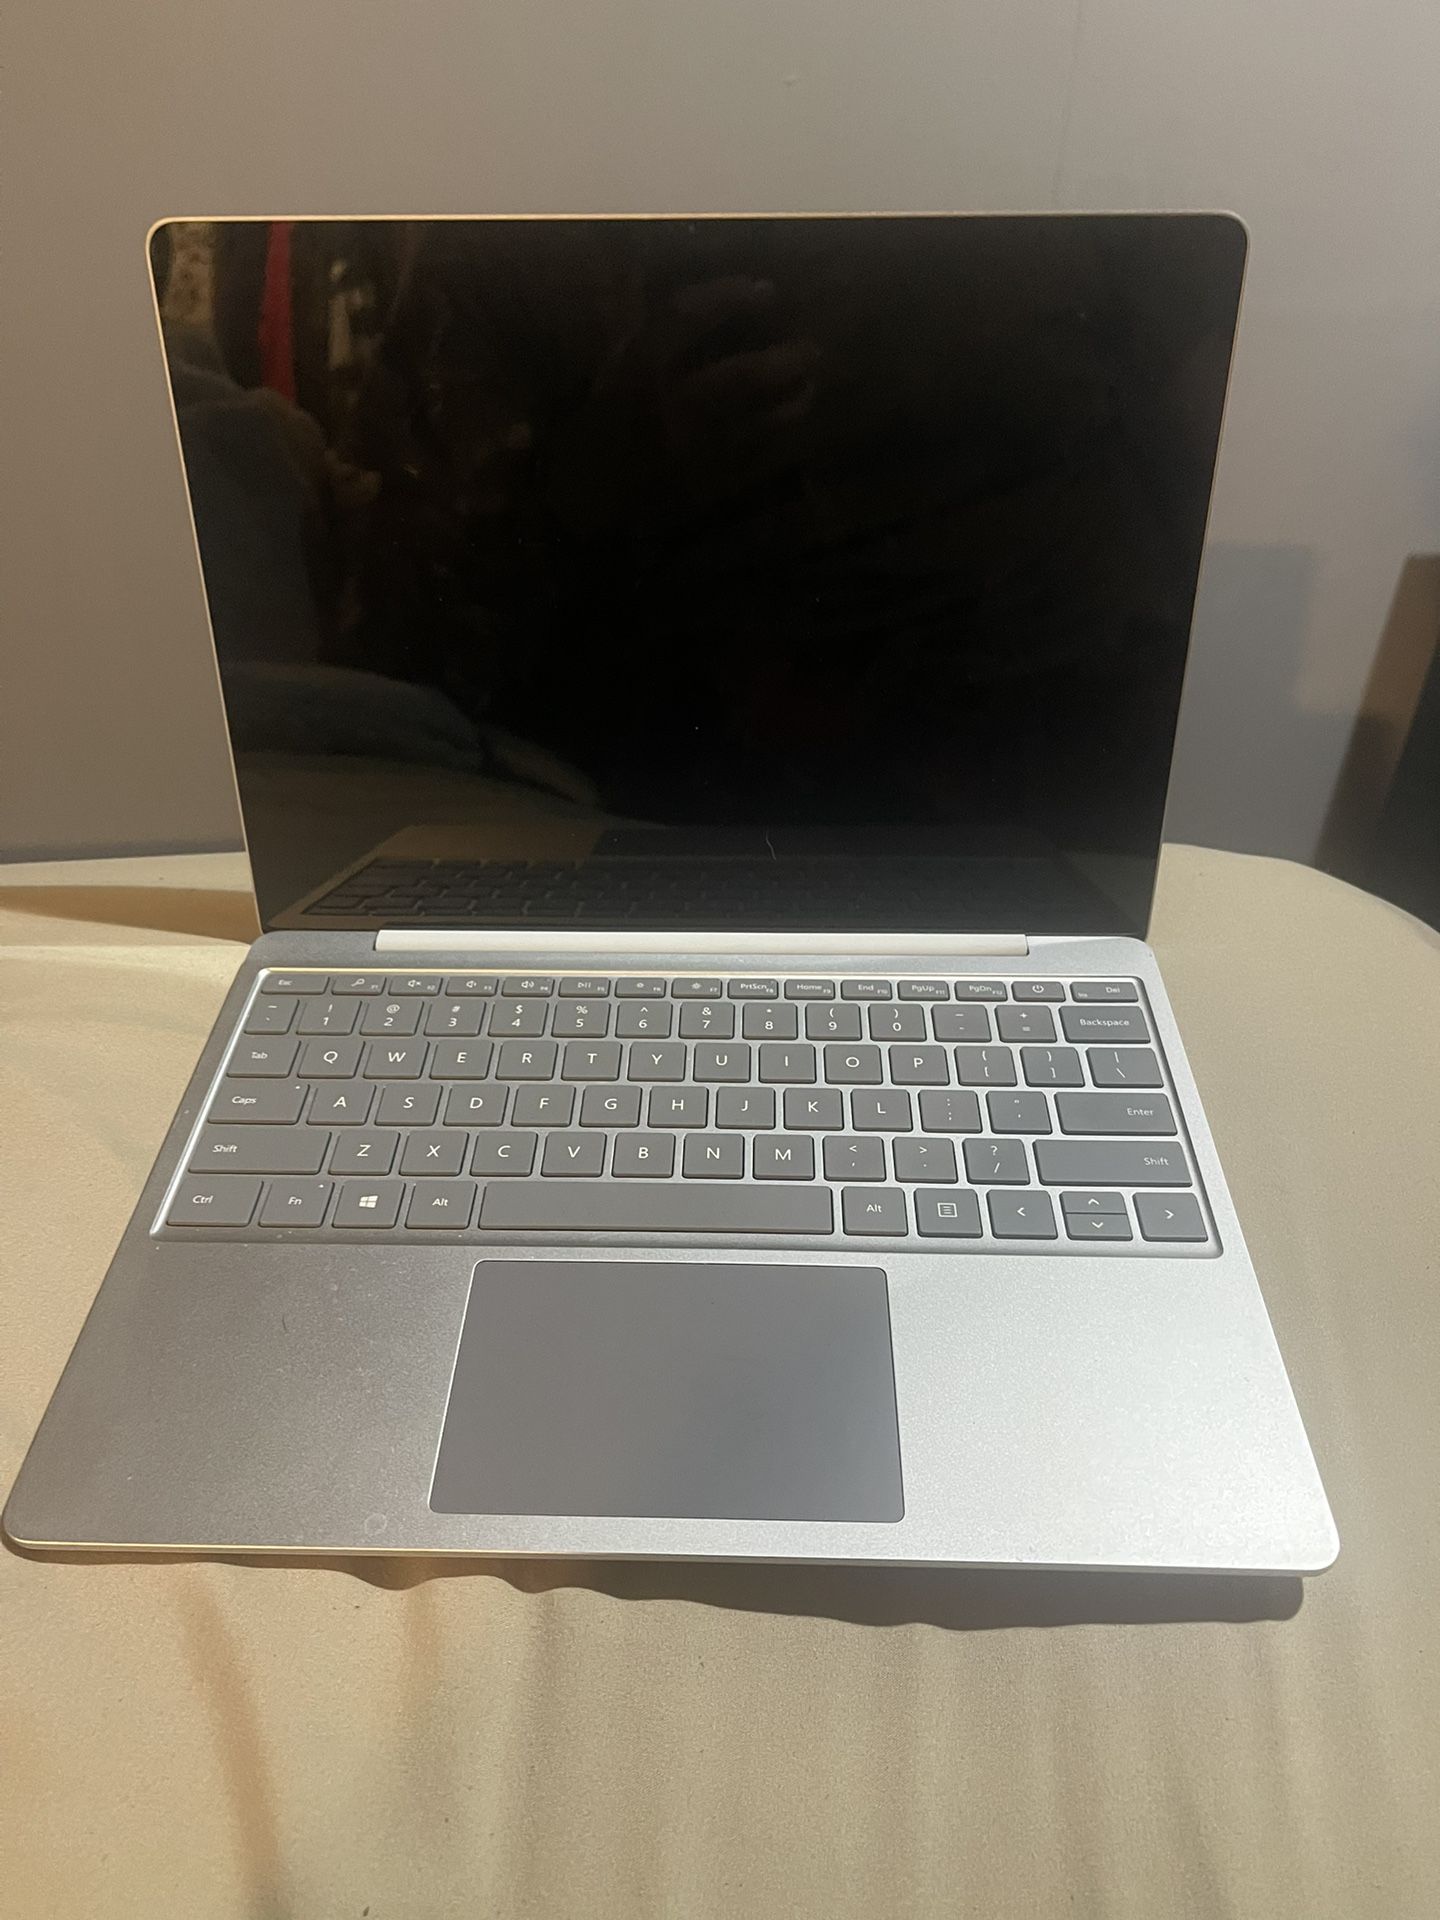 Microsoft Laptop 